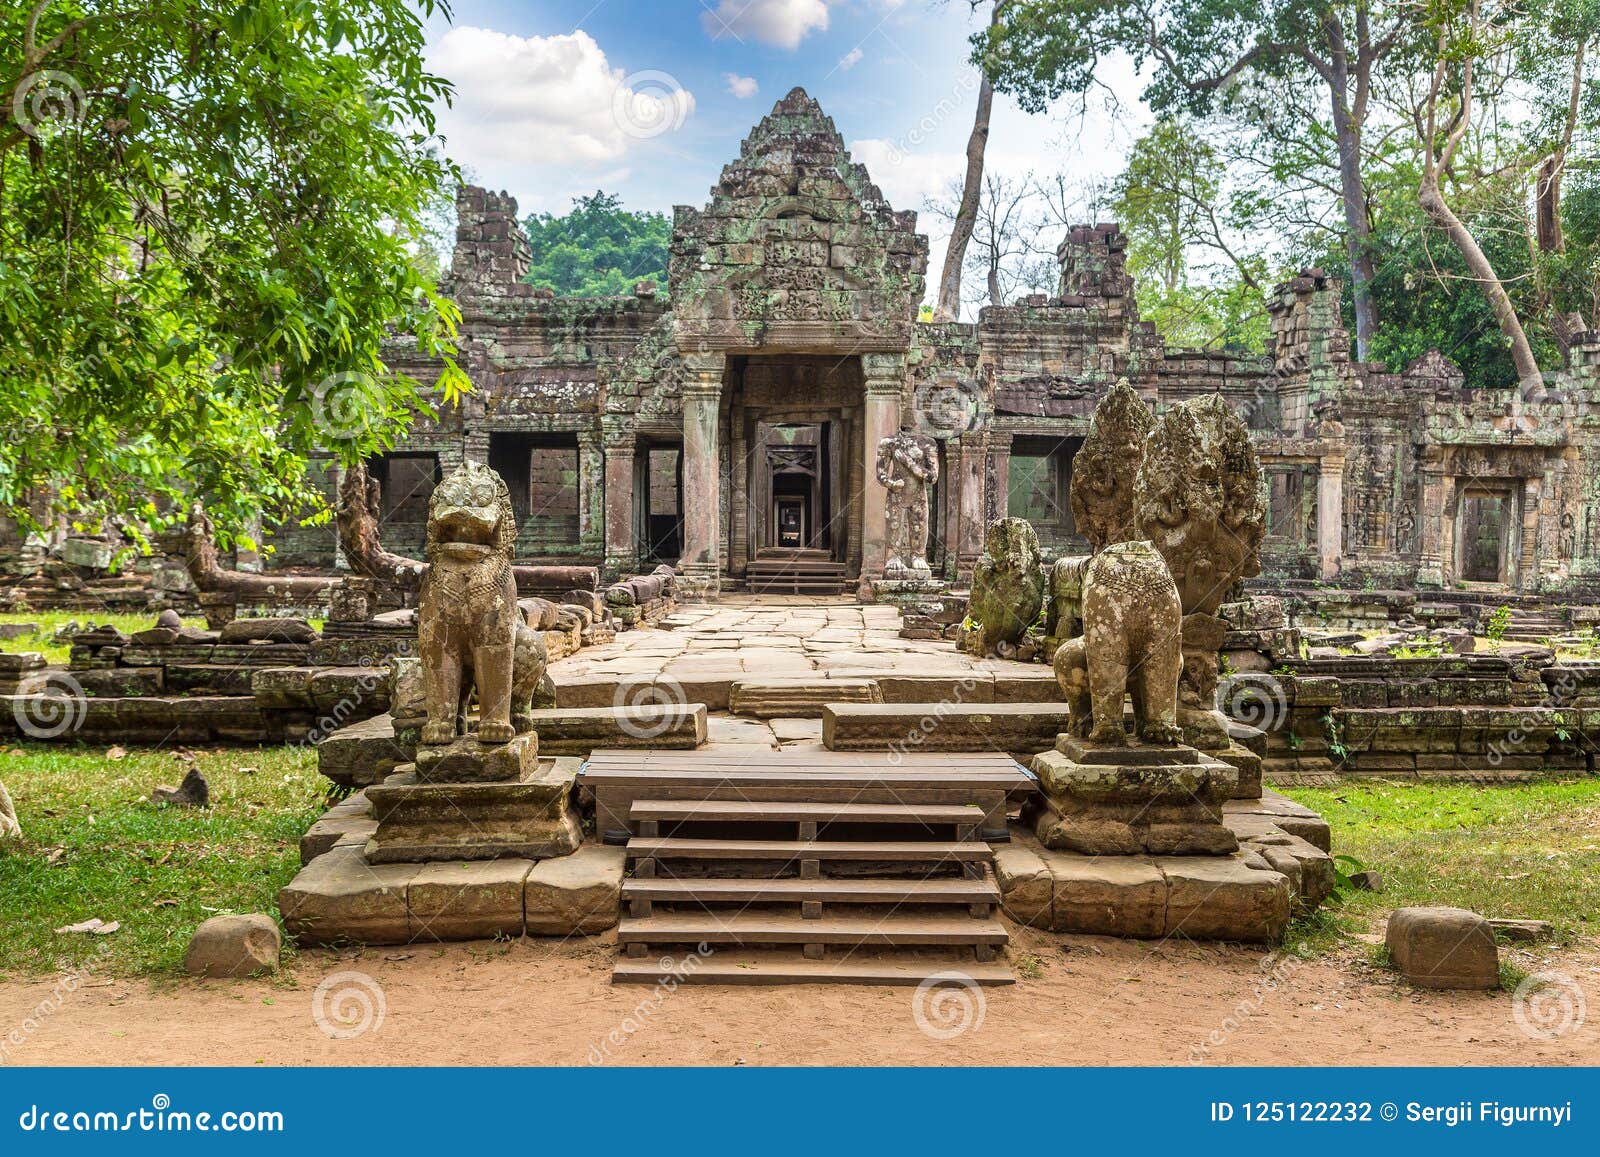 preah khan temple in angkor wat